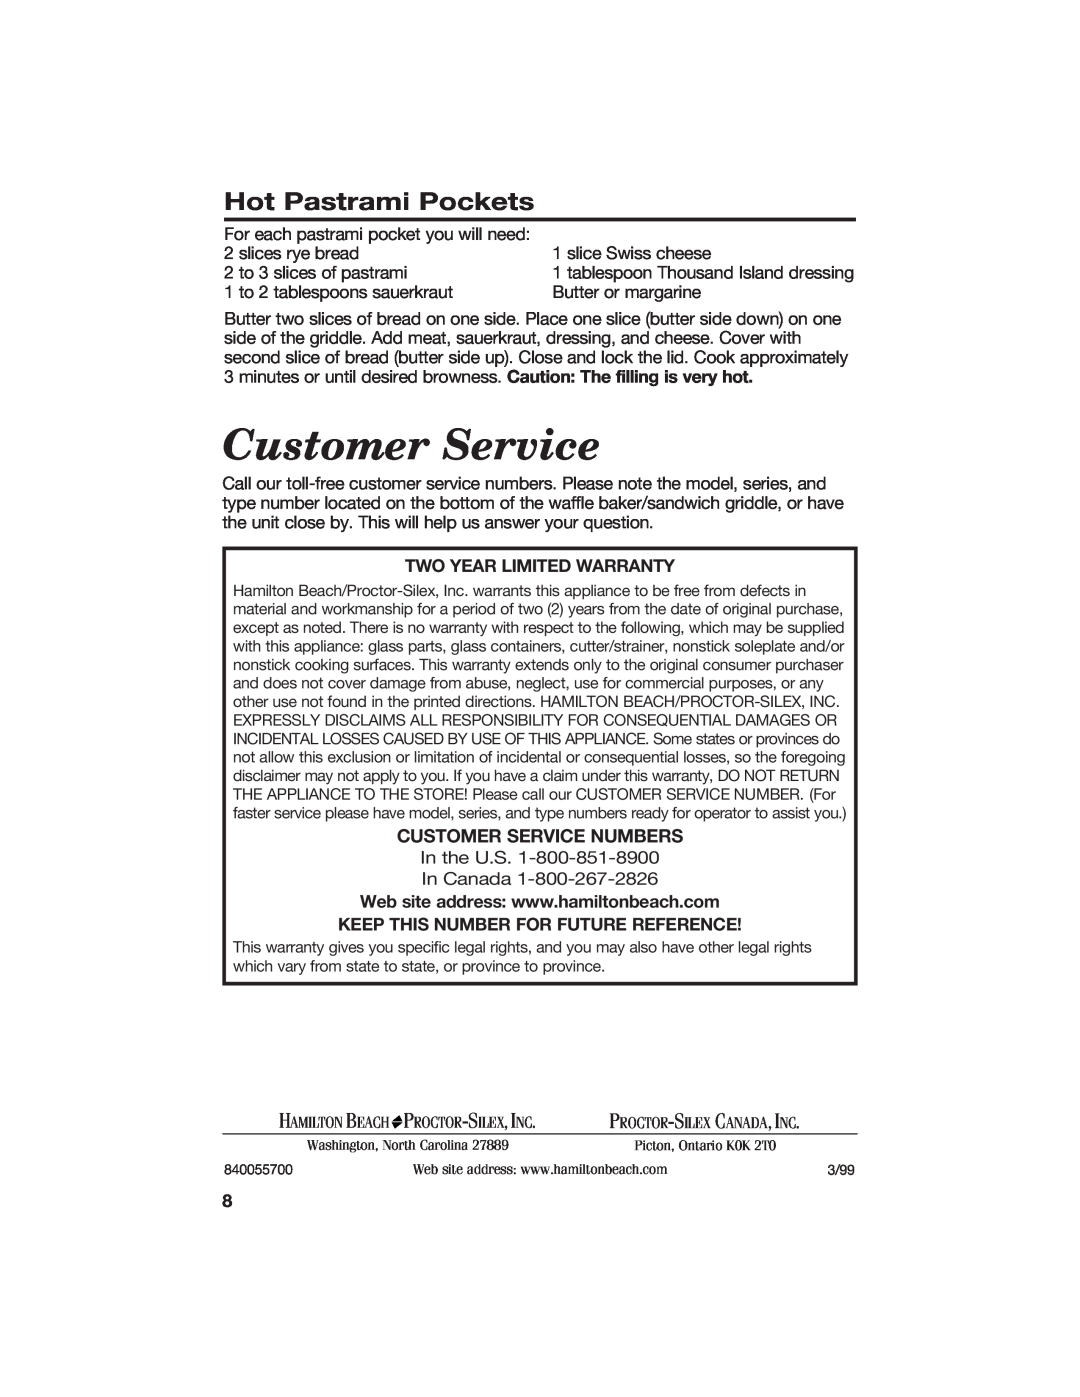 Hamilton Beach 840055700 manual Hot Pastrami Pockets, Two Year Limited Warranty, Customer Service Numbers 